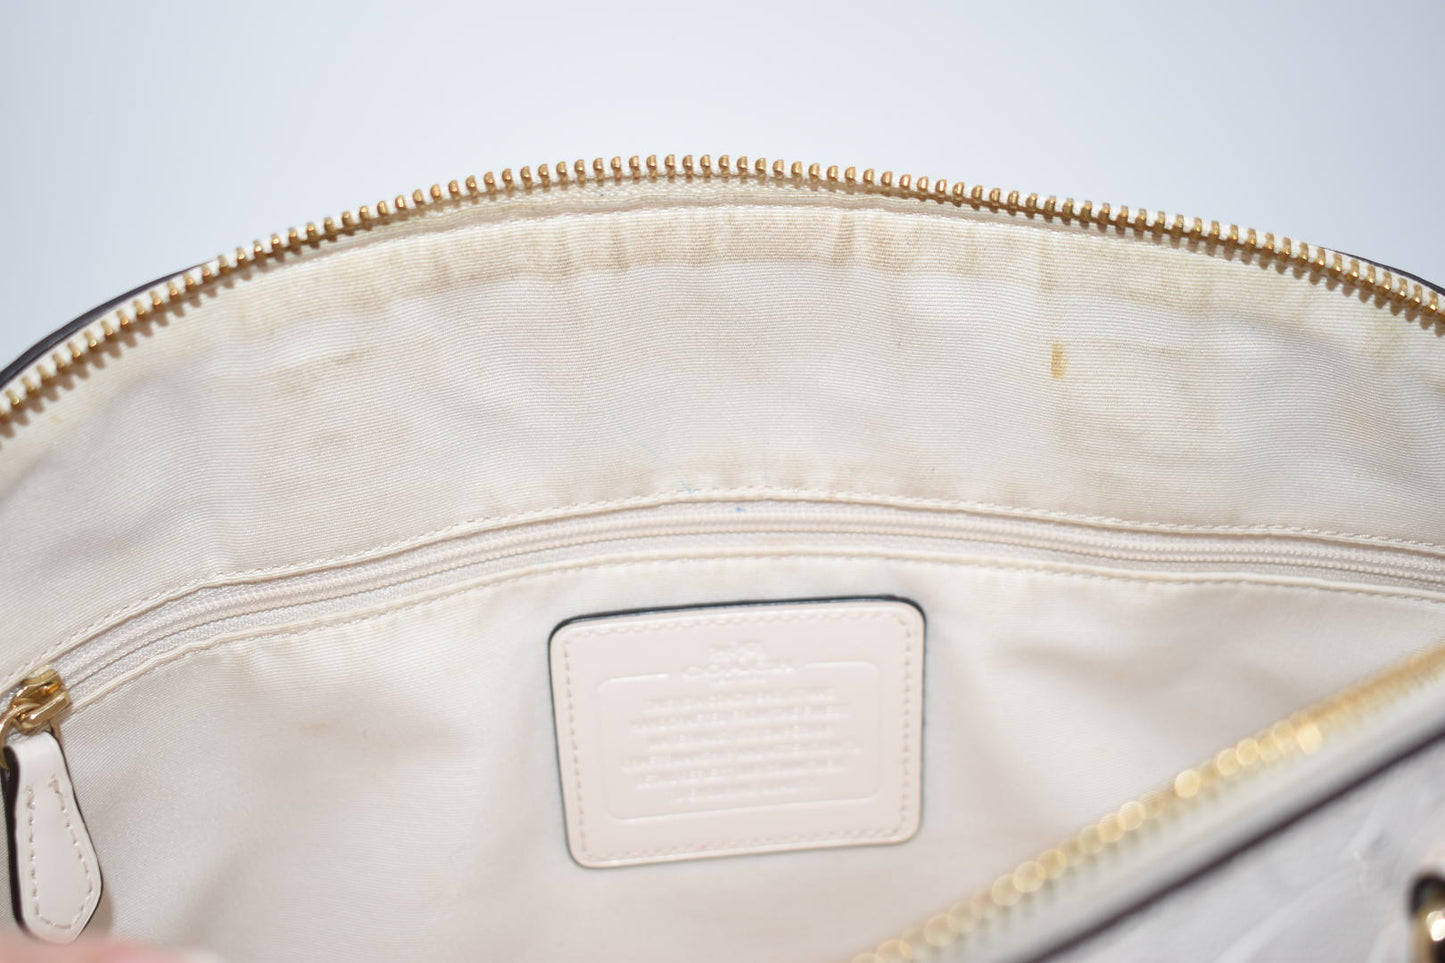 Coach Signature Debossed Patent Leather Chalk Satchel Bag